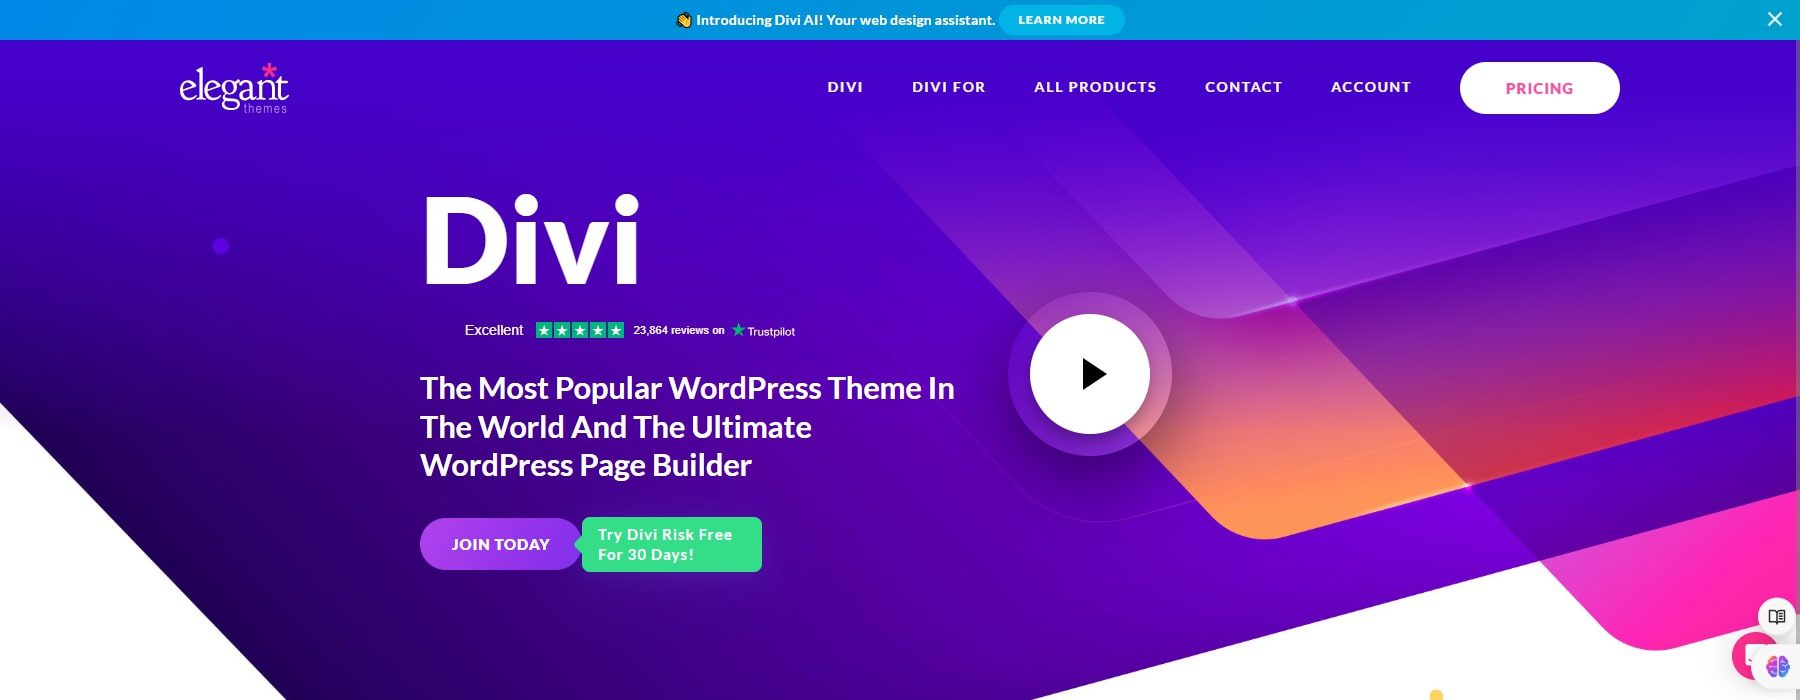 elegant themes divi developer websites